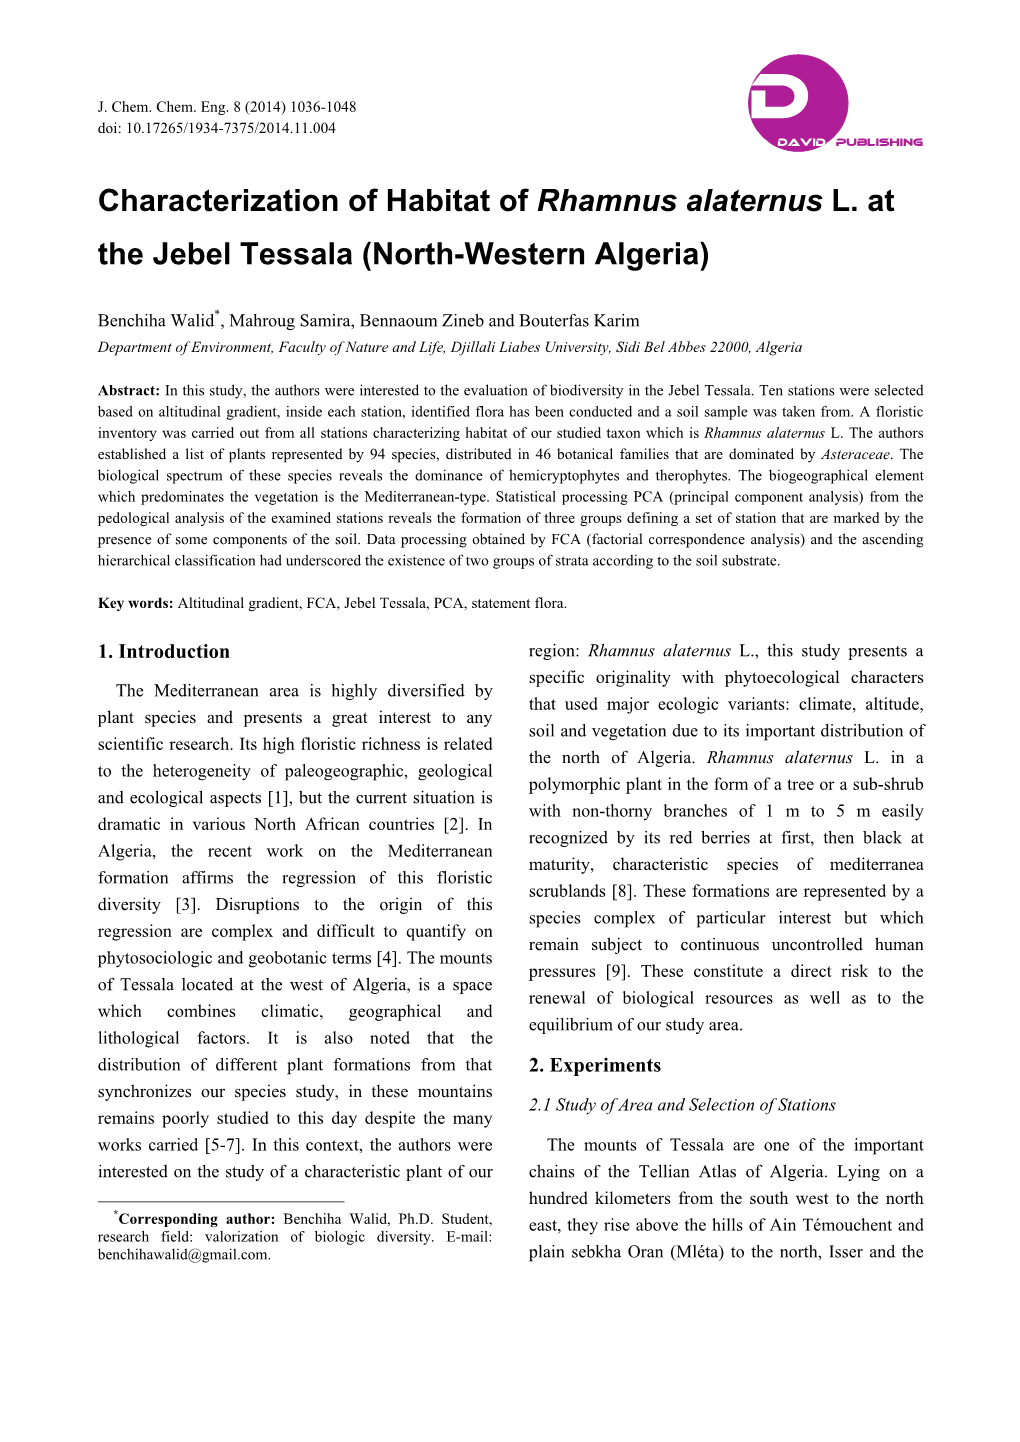 Characterization of Habitat of Rhamnus Alaternus L. at the Jebel Tessala (North-Western Algeria)